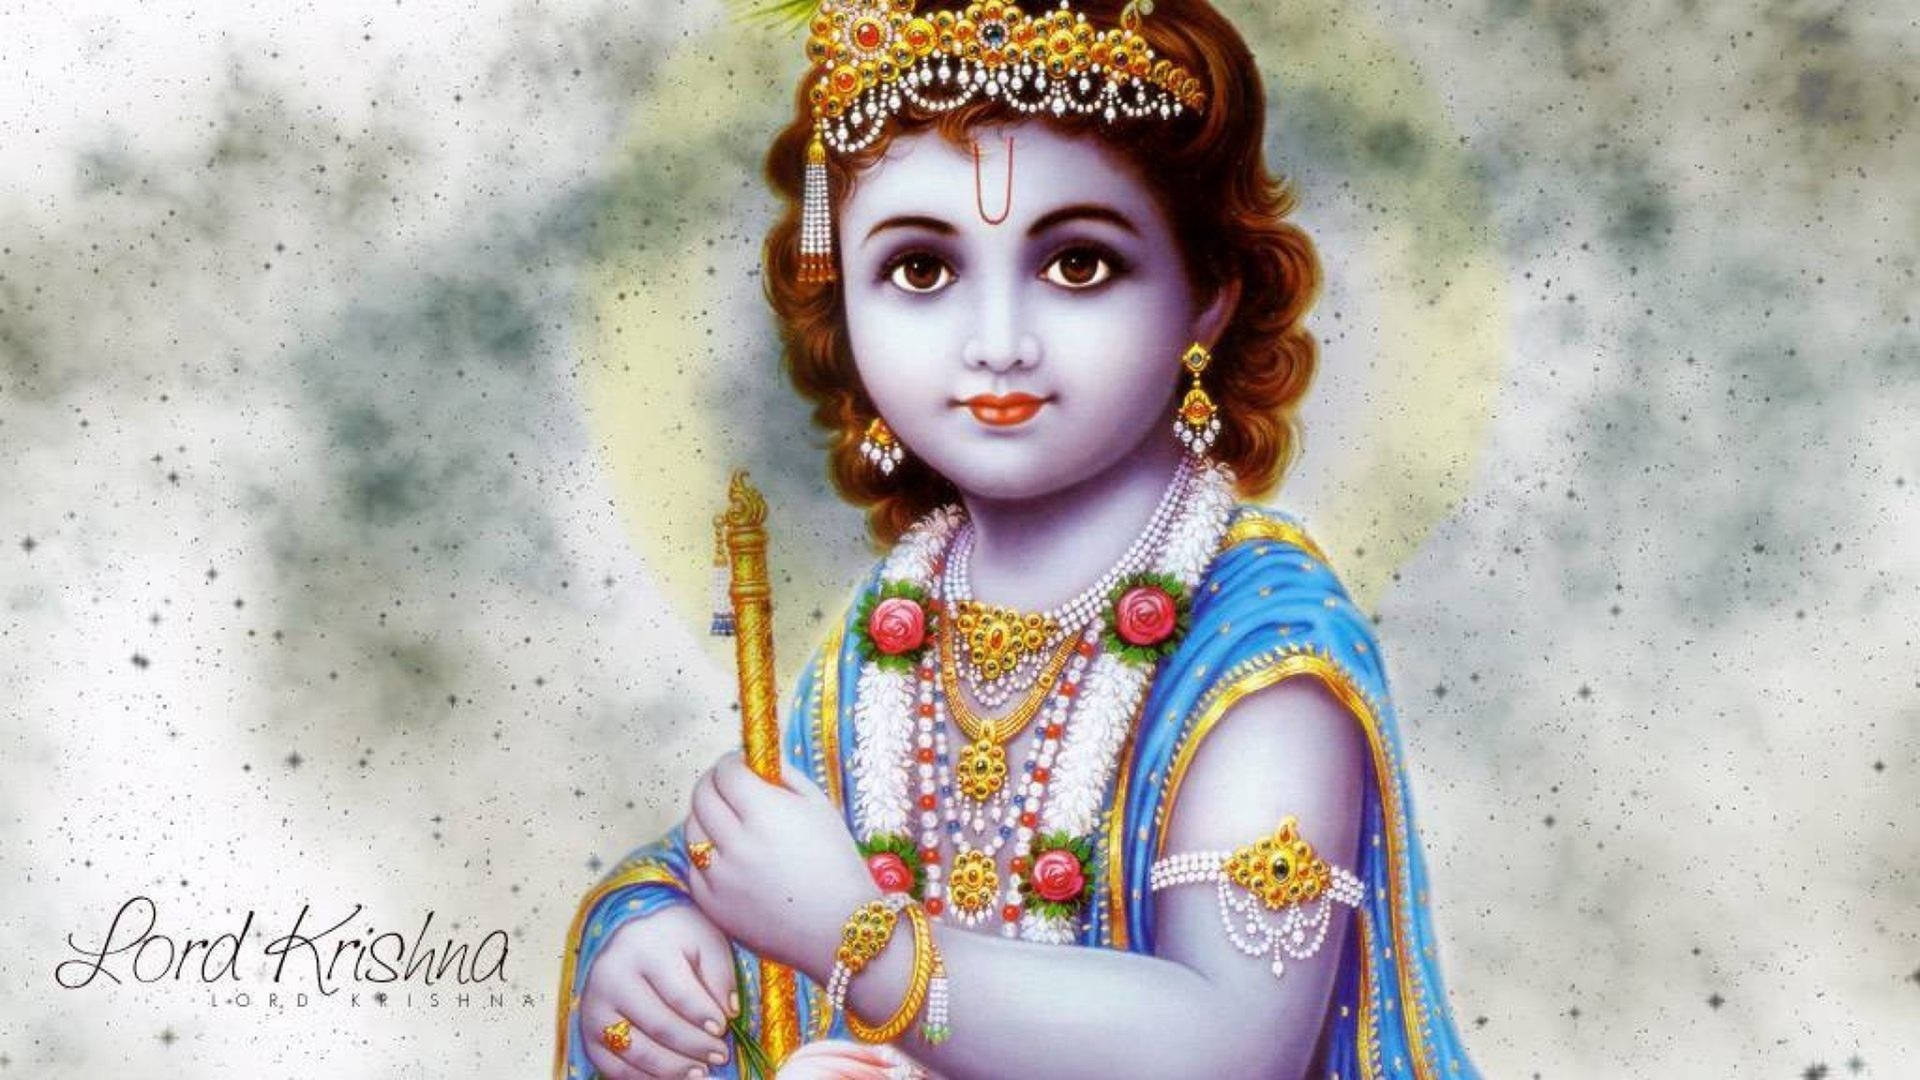 Young Lord Krishna 4k Digital Art Wallpaper